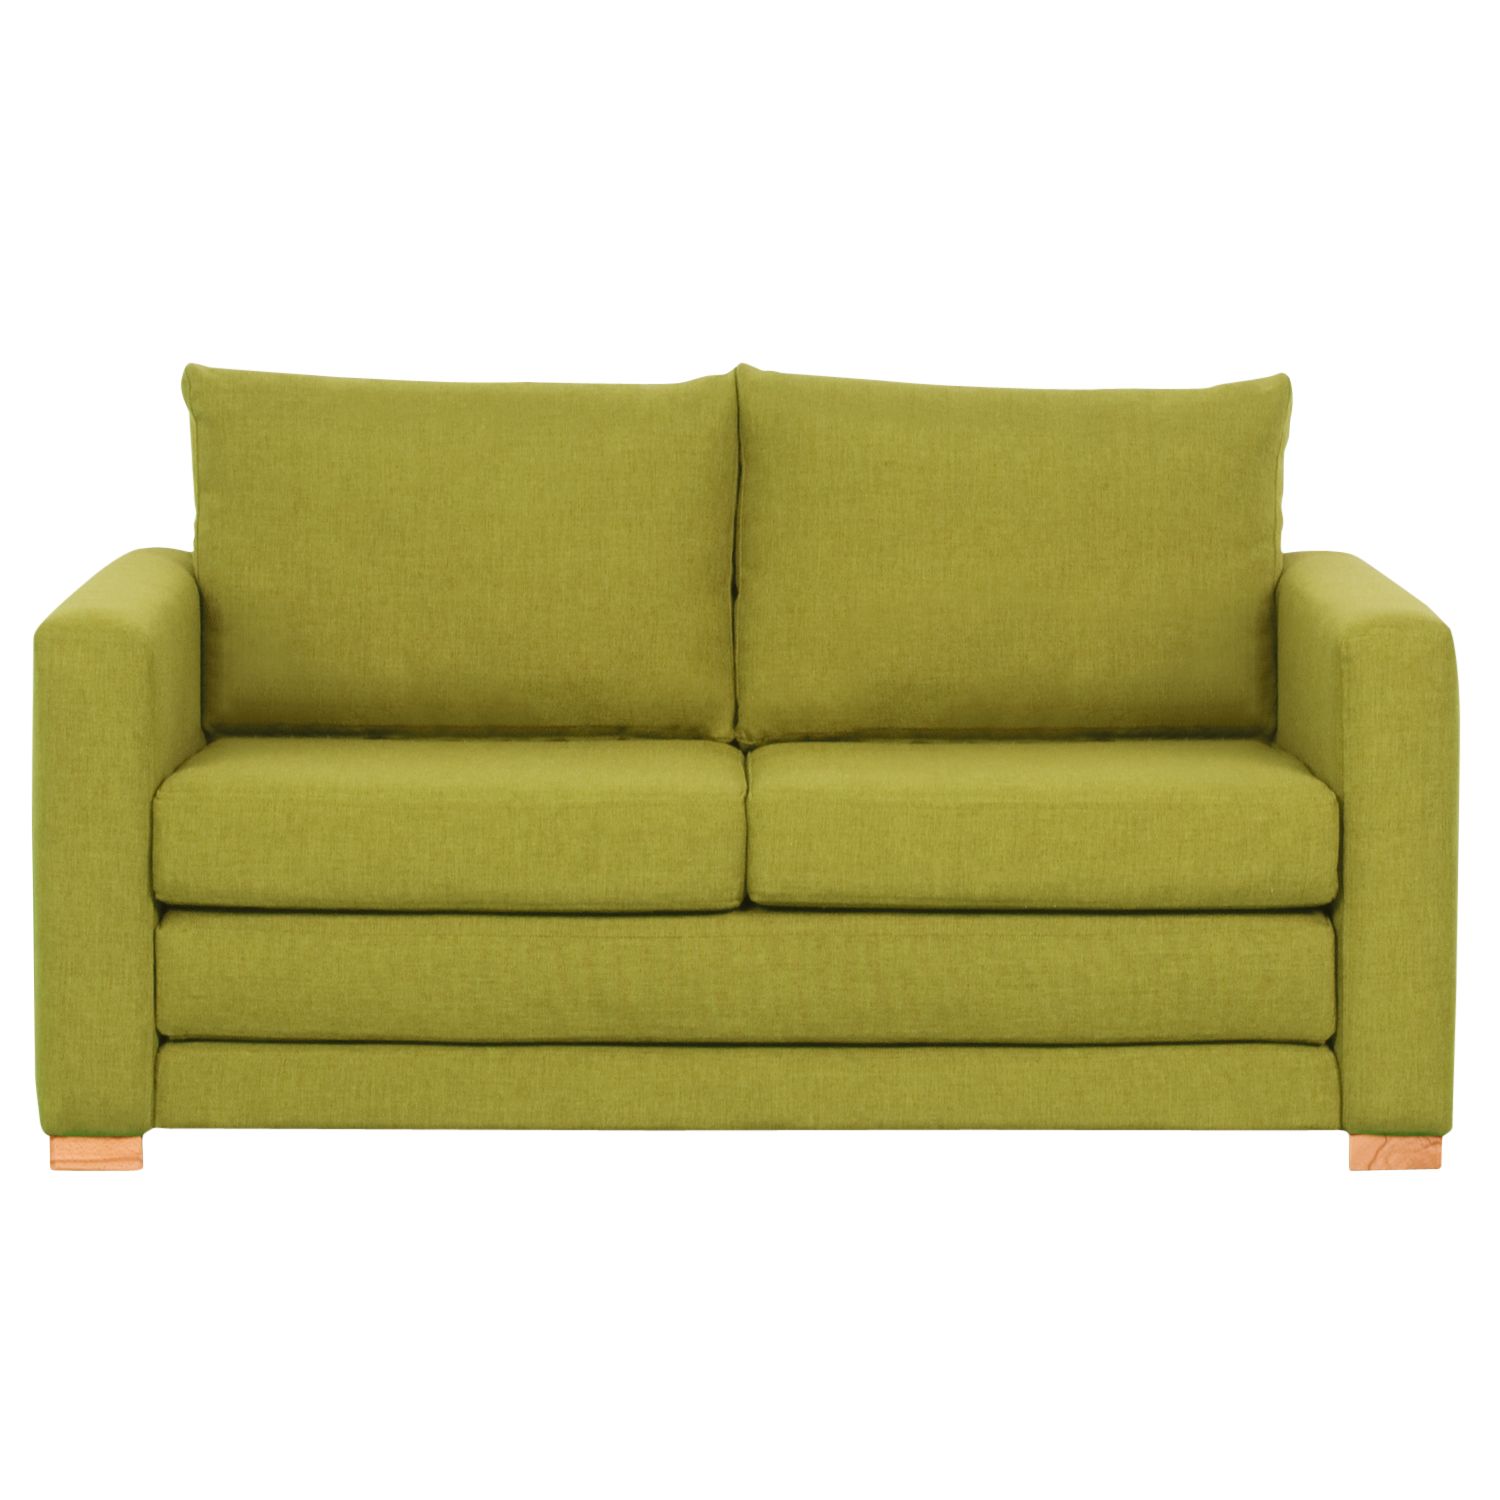 John Lewis Maisie Small Sofa Bed, Oslo Green / Light Leg, width 142cm